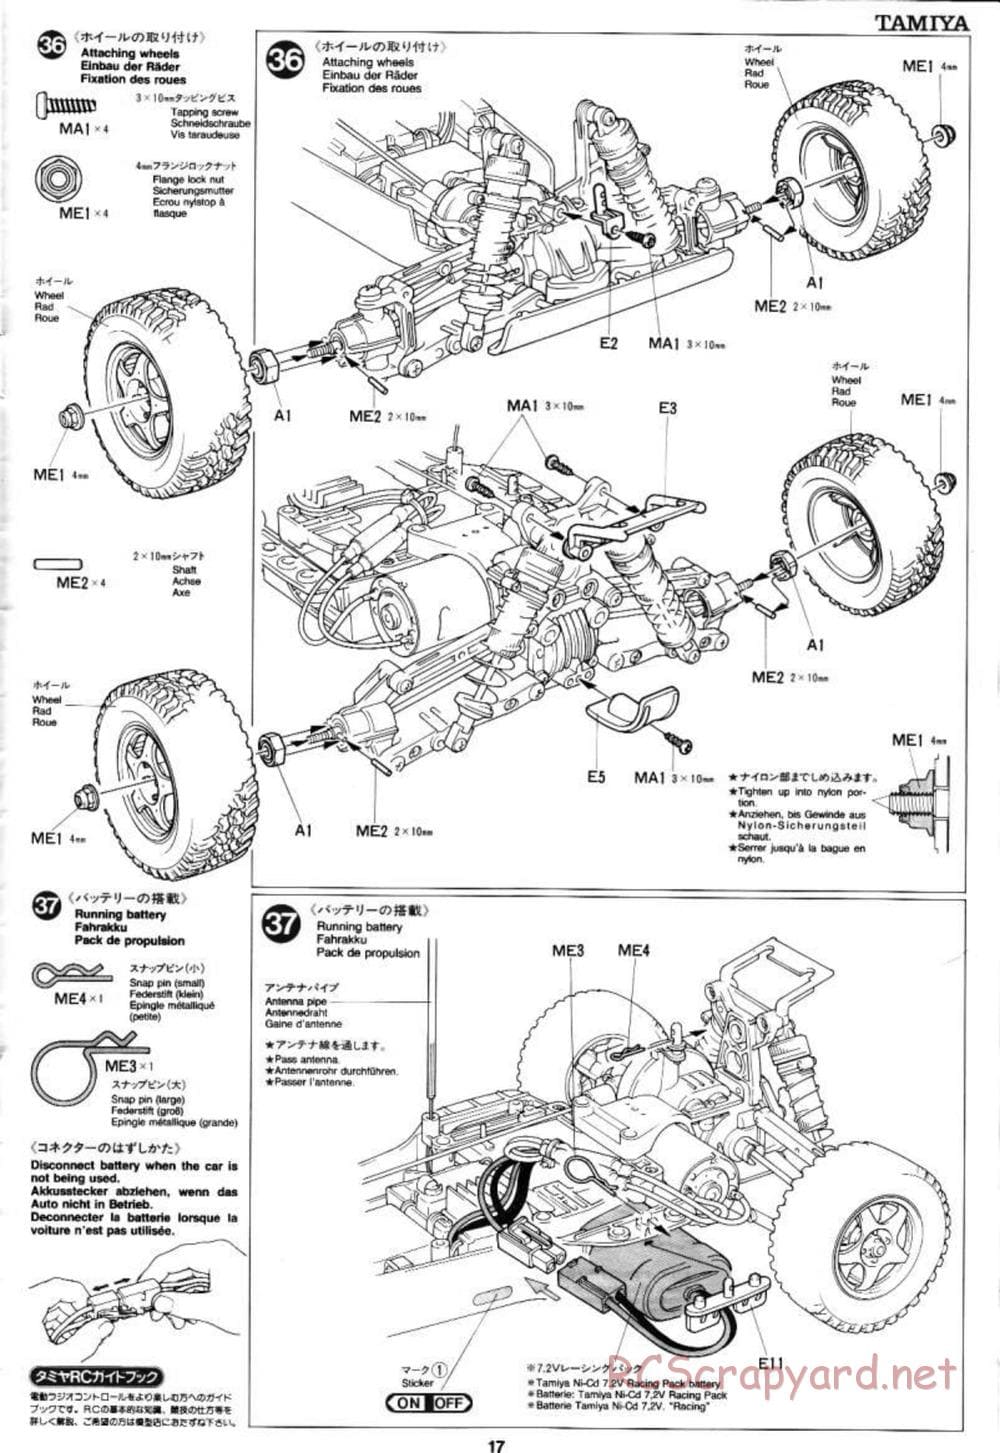 Tamiya - Blazing Star Chassis - Manual - Page 17